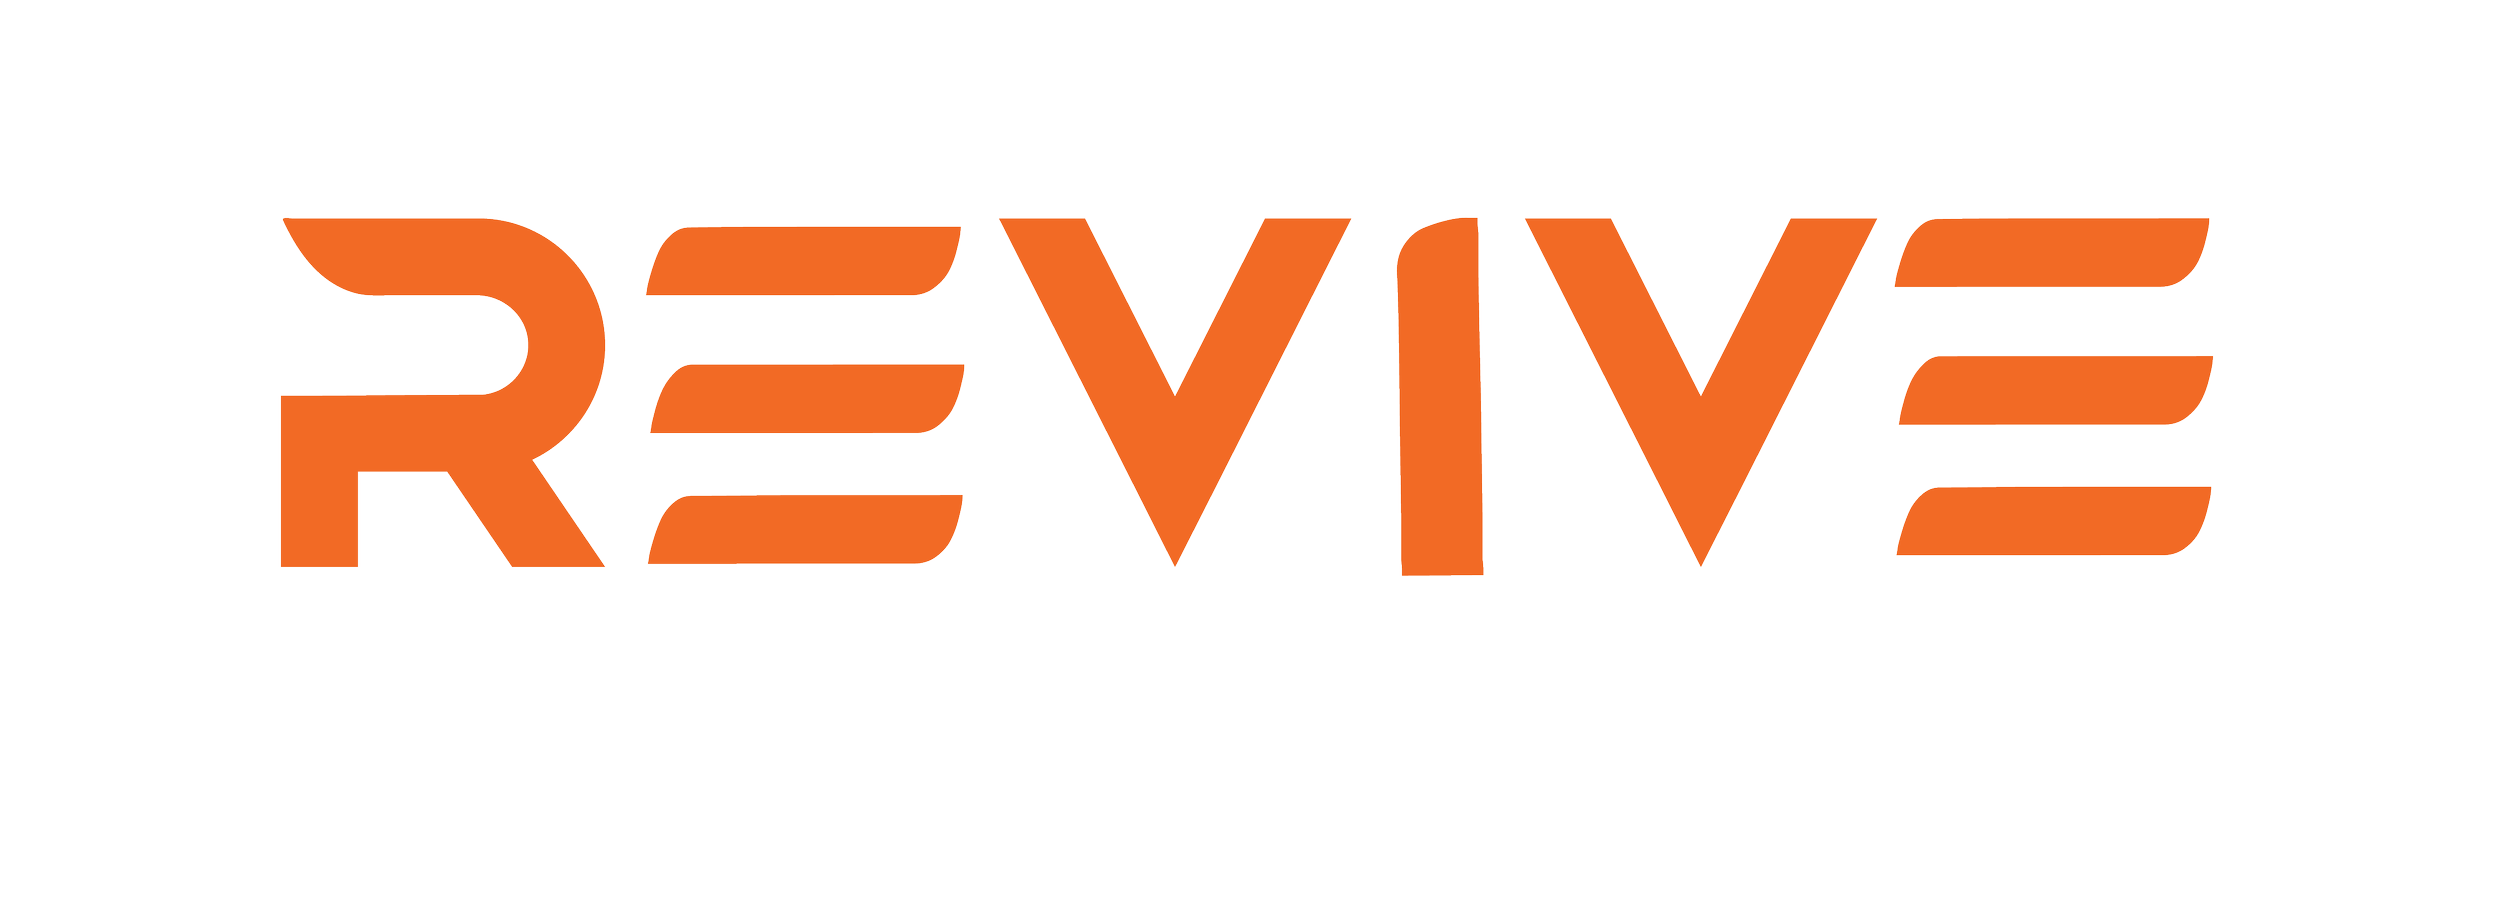 Revive – Private Edition Nashville